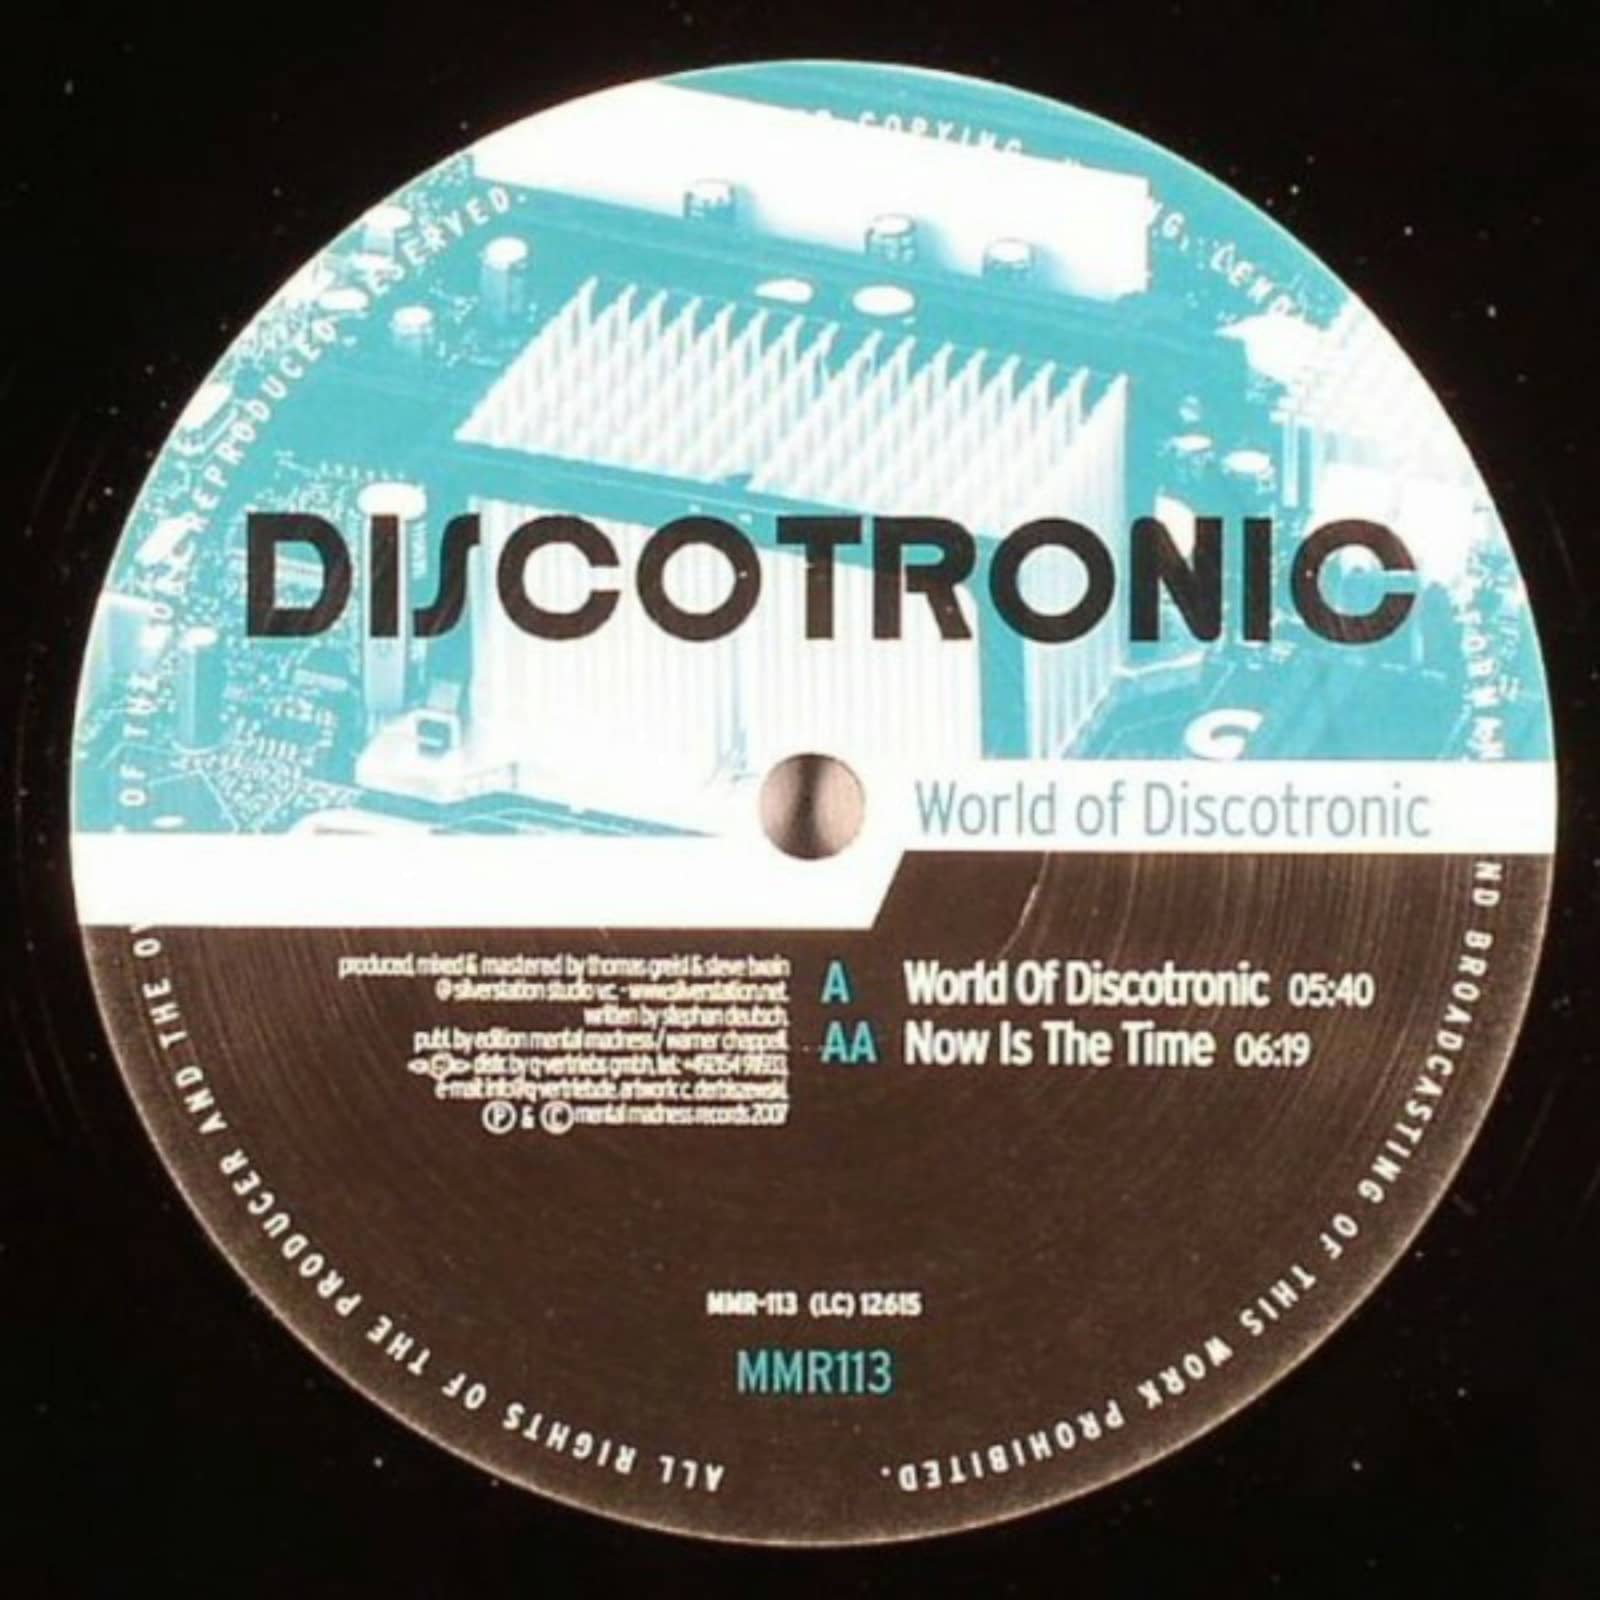 Tune Discotronic - The World Of Discotronic (Single Edit) : (G)radio.